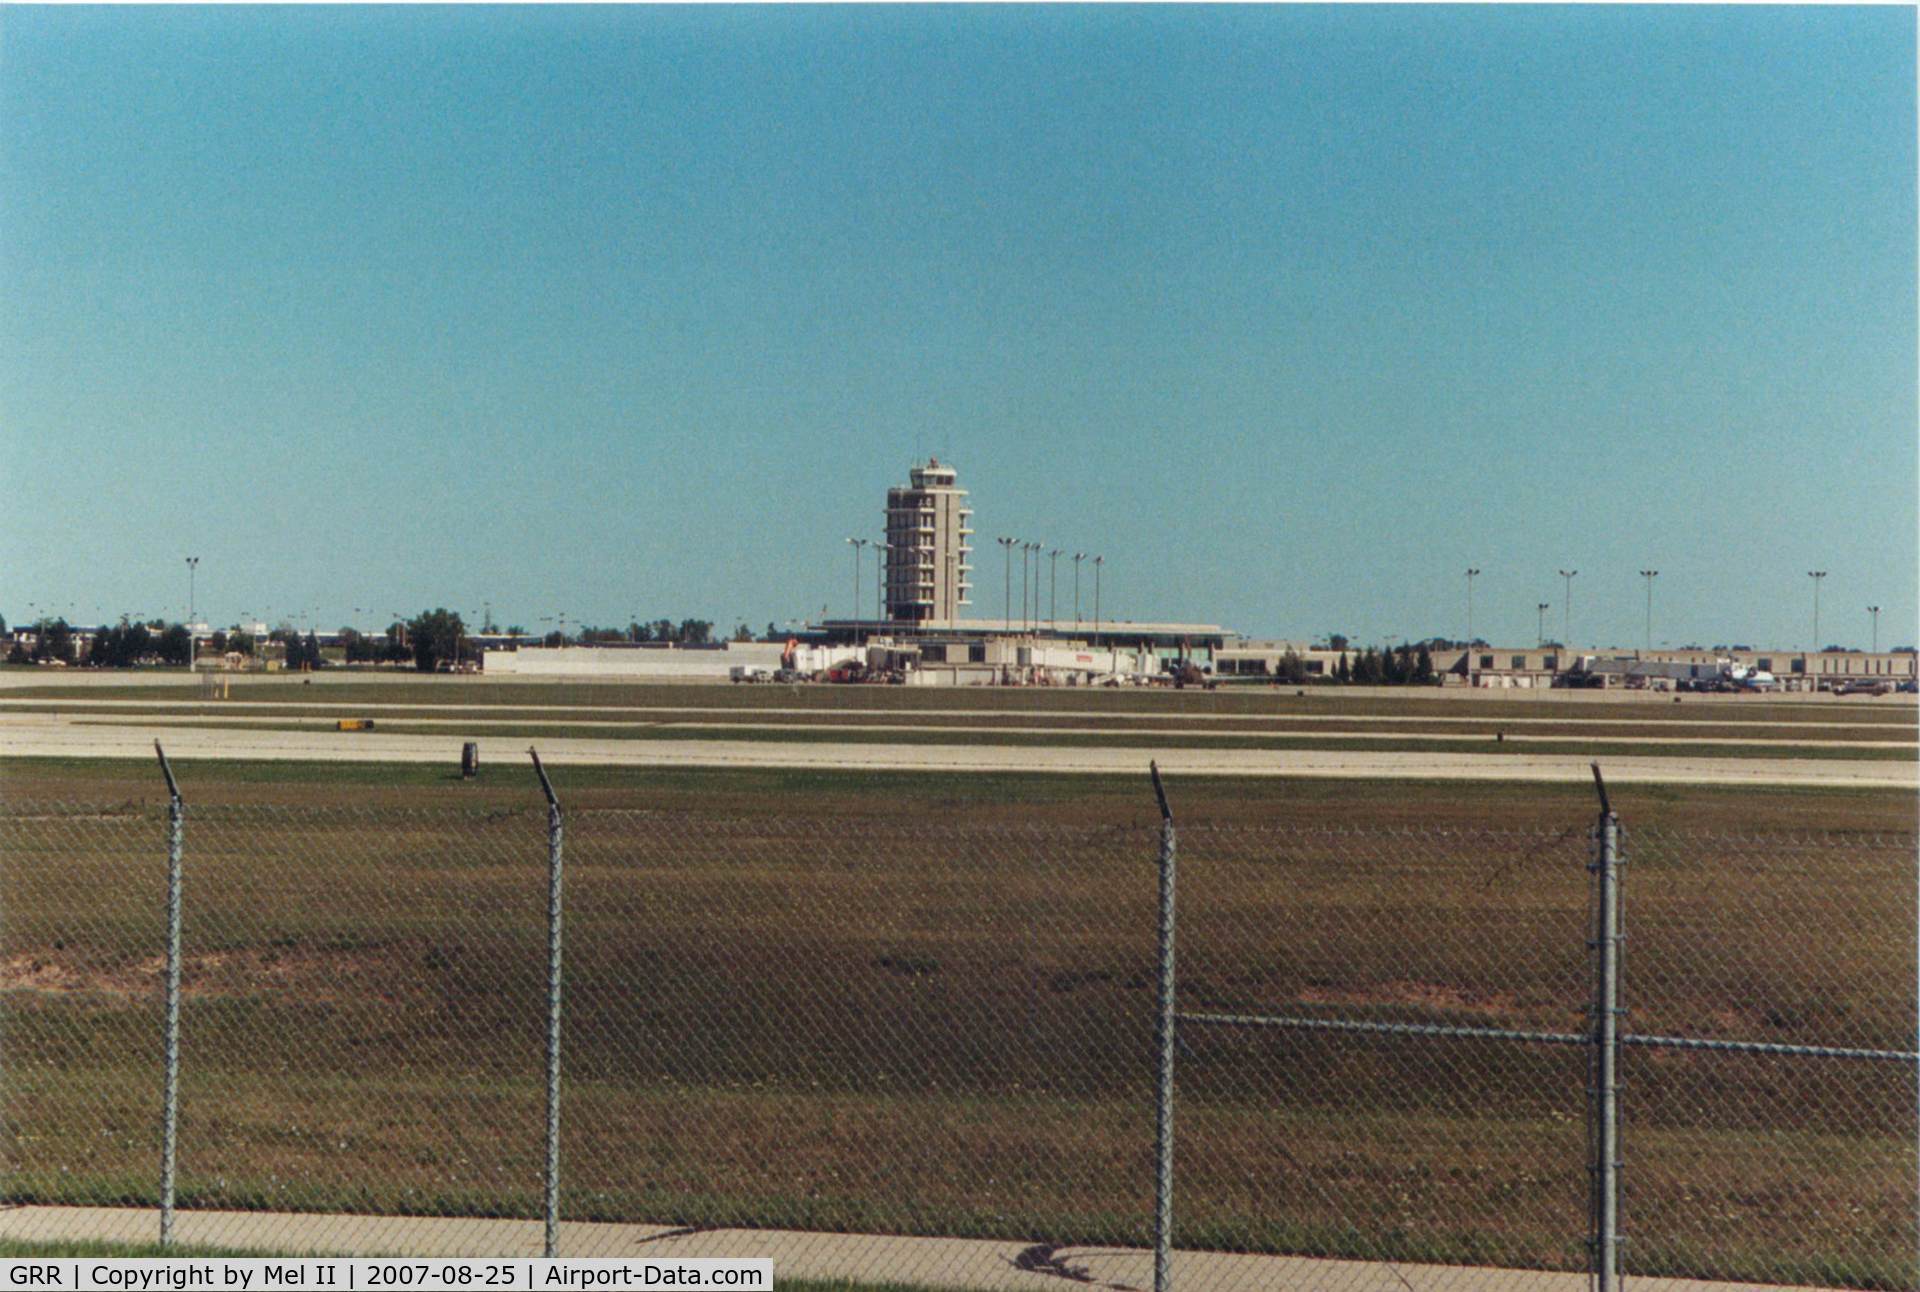 Gerald R. Ford International Airport (GRR) - Control Tower, Terminal, and Tarmac @ Gerald R. Ford International Airport (GRR)